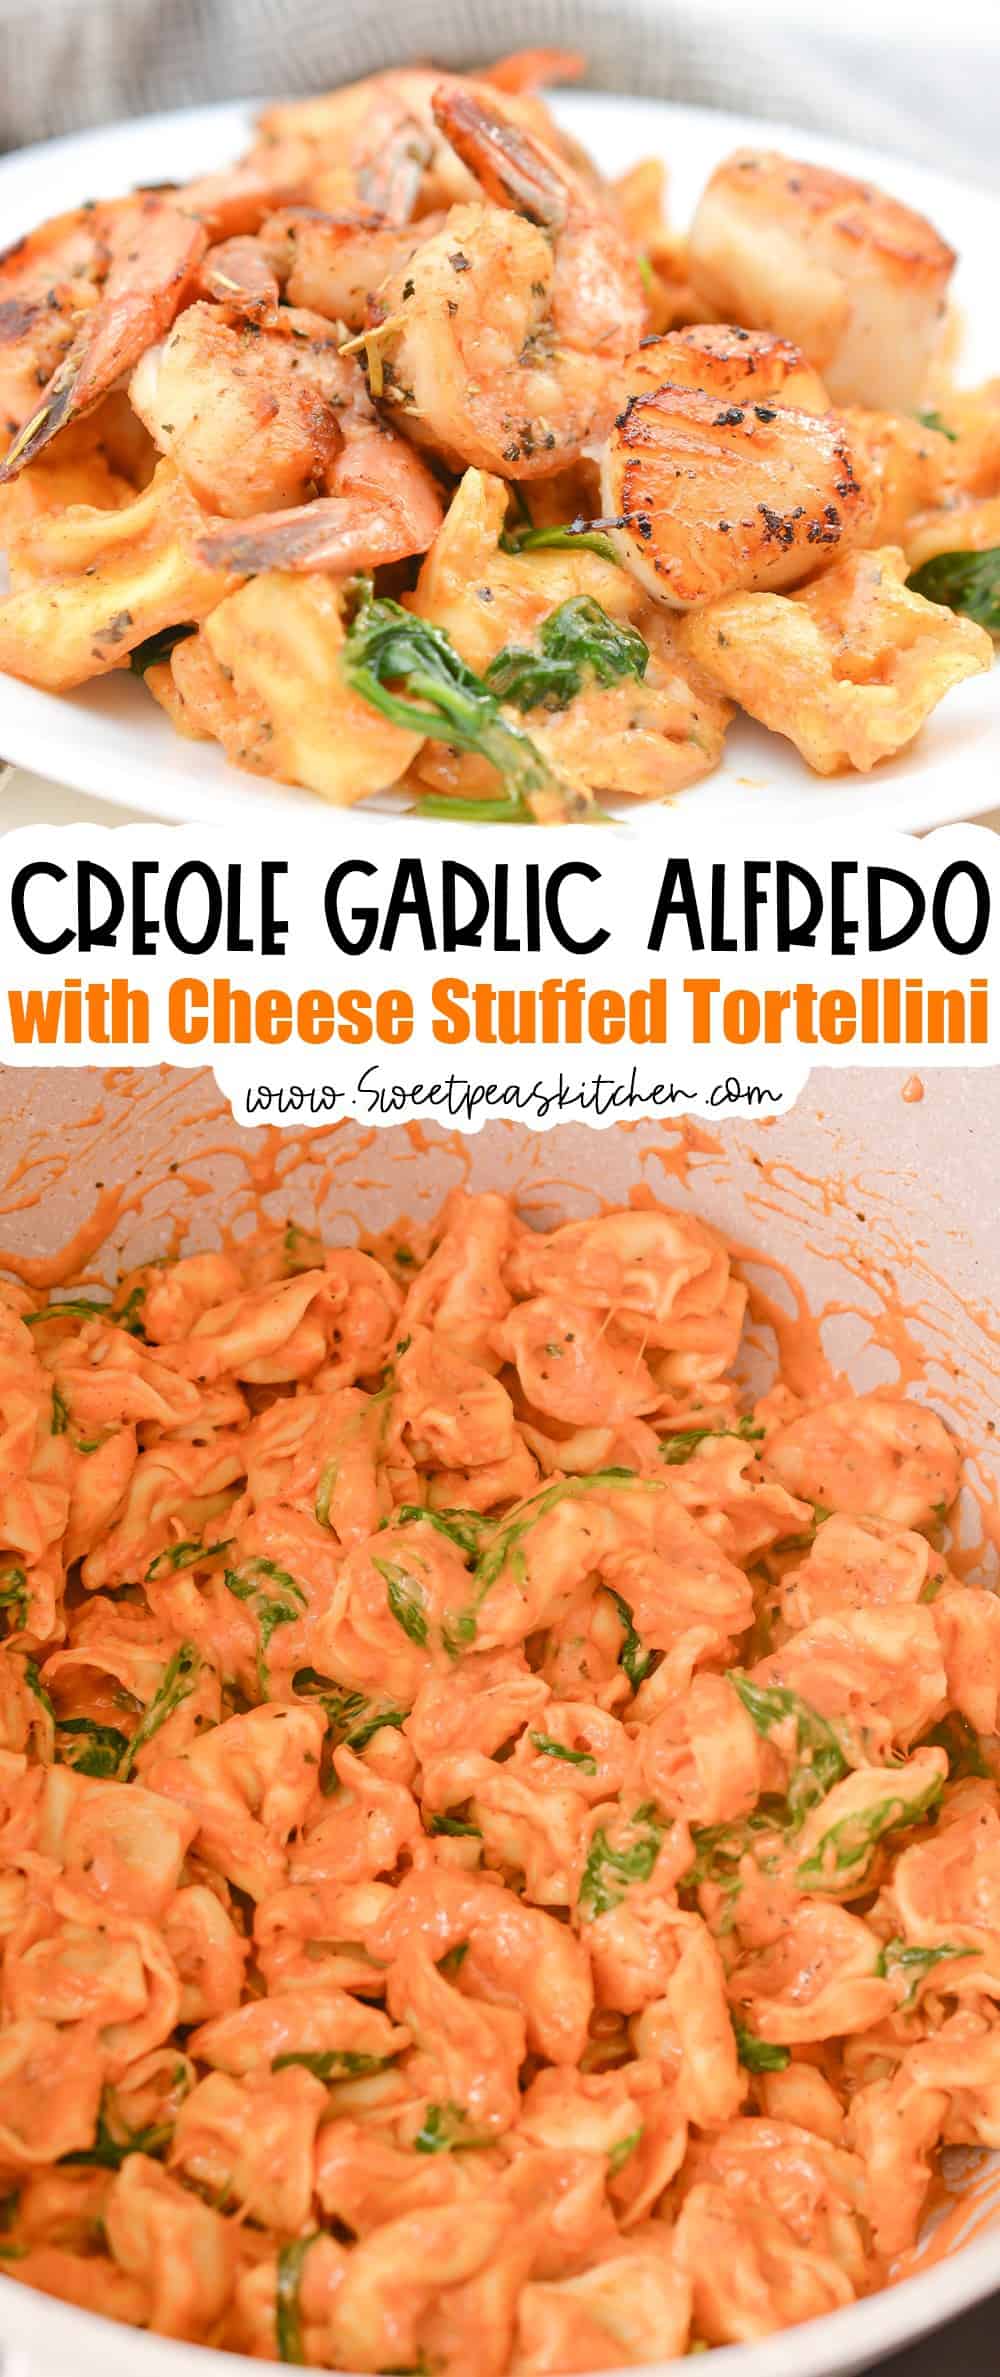 Creole Garlic Alfredo with Cheese Stuffed Tortellini